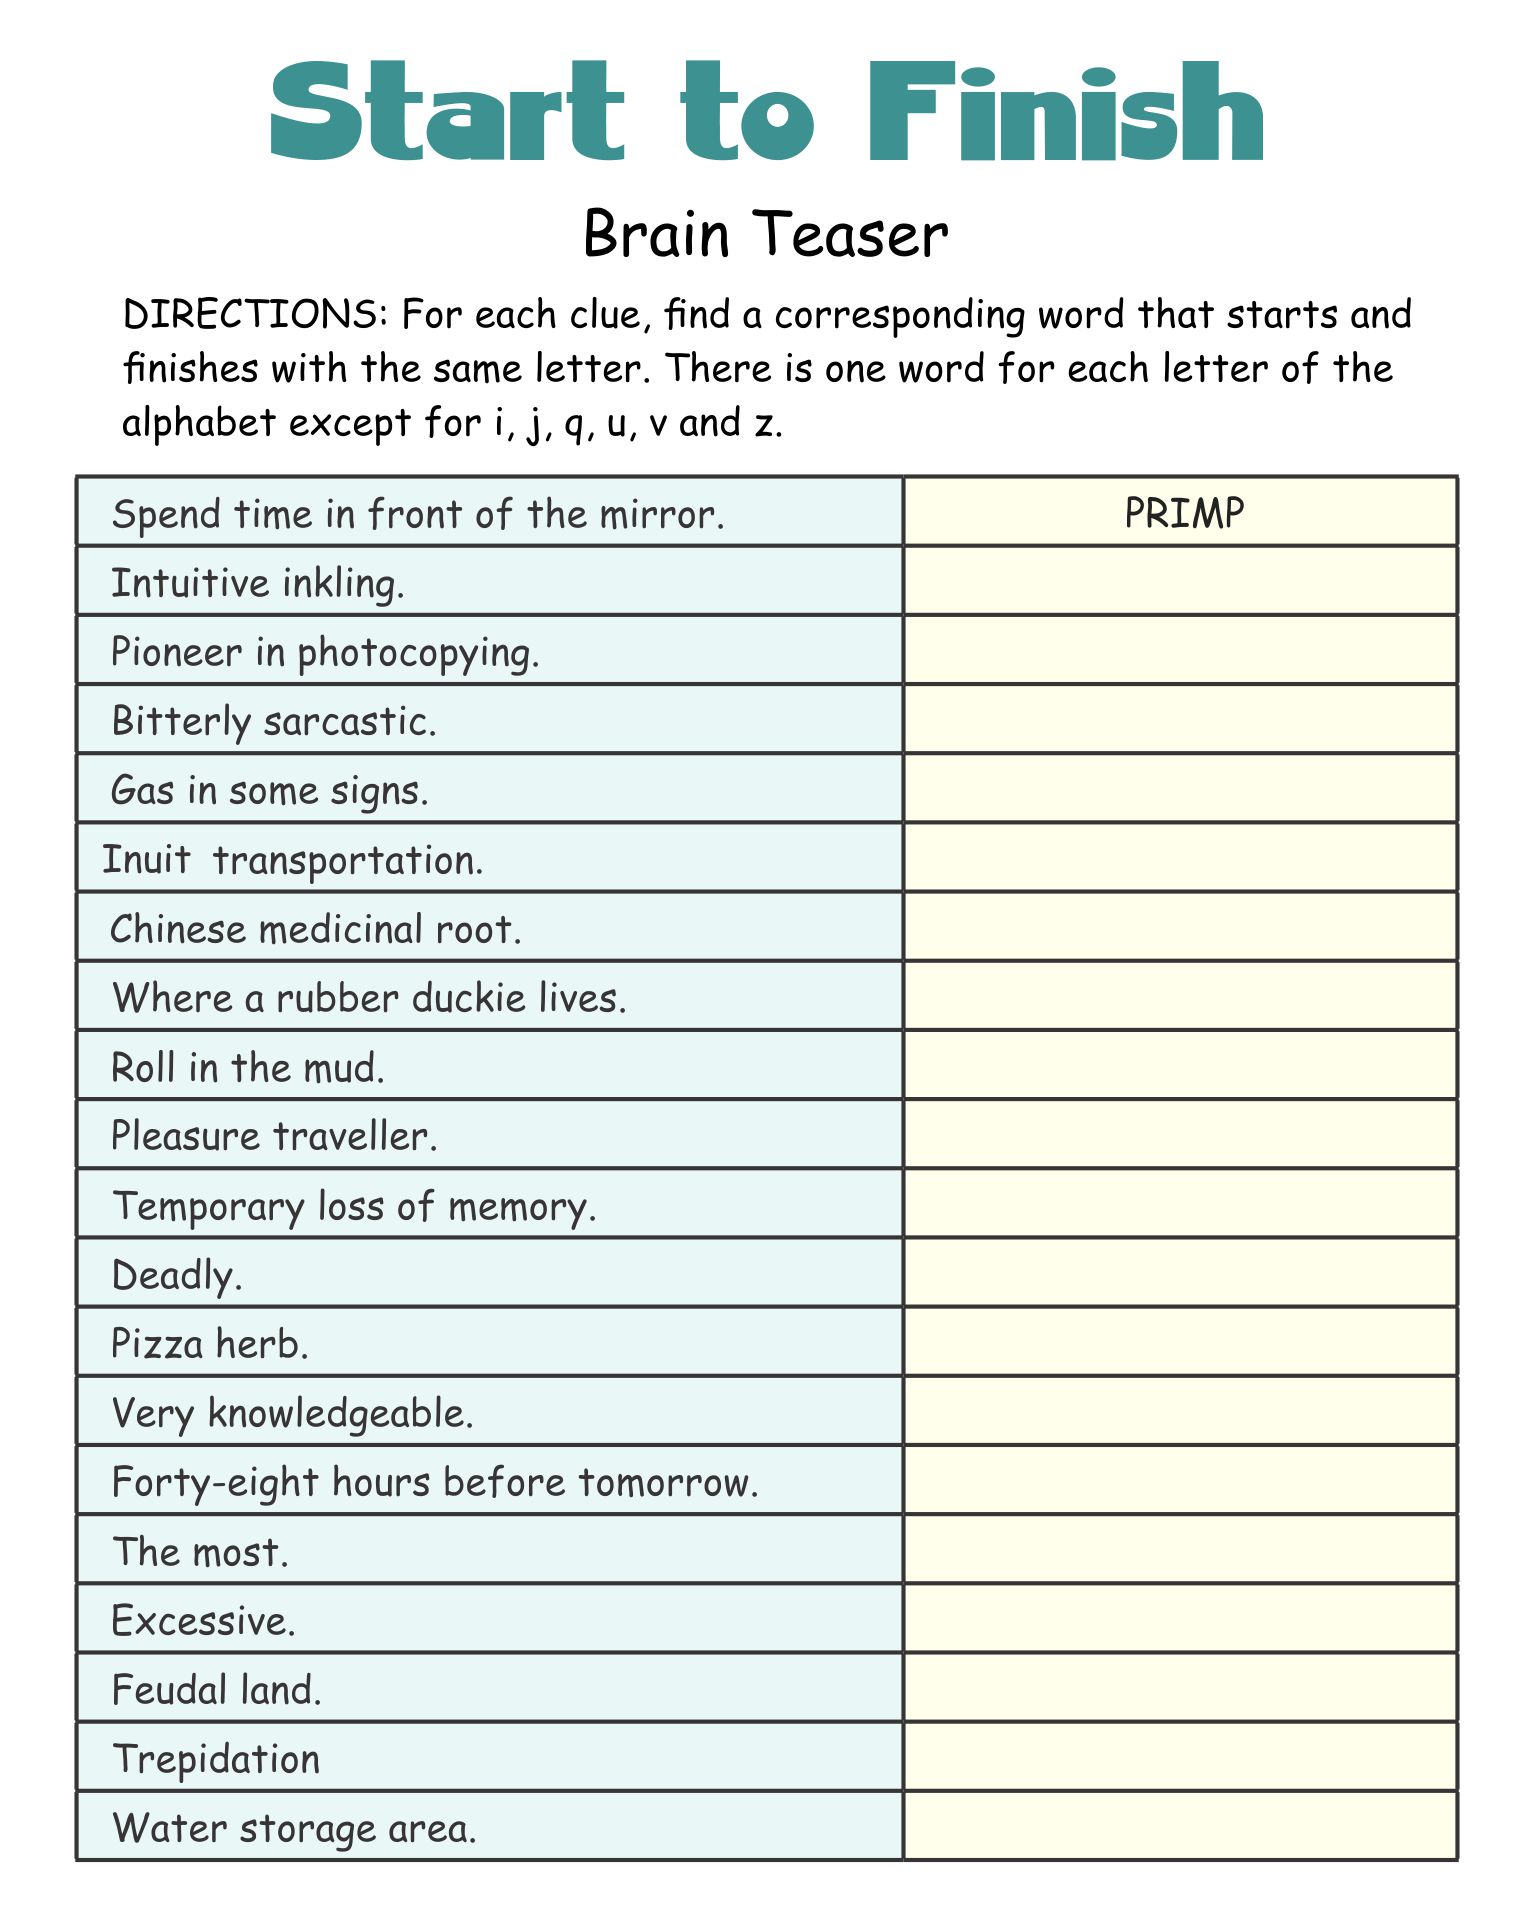 brain-teasers-riddles-puzzles-card-game-set-2-english-esl-worksheets-printable-brain